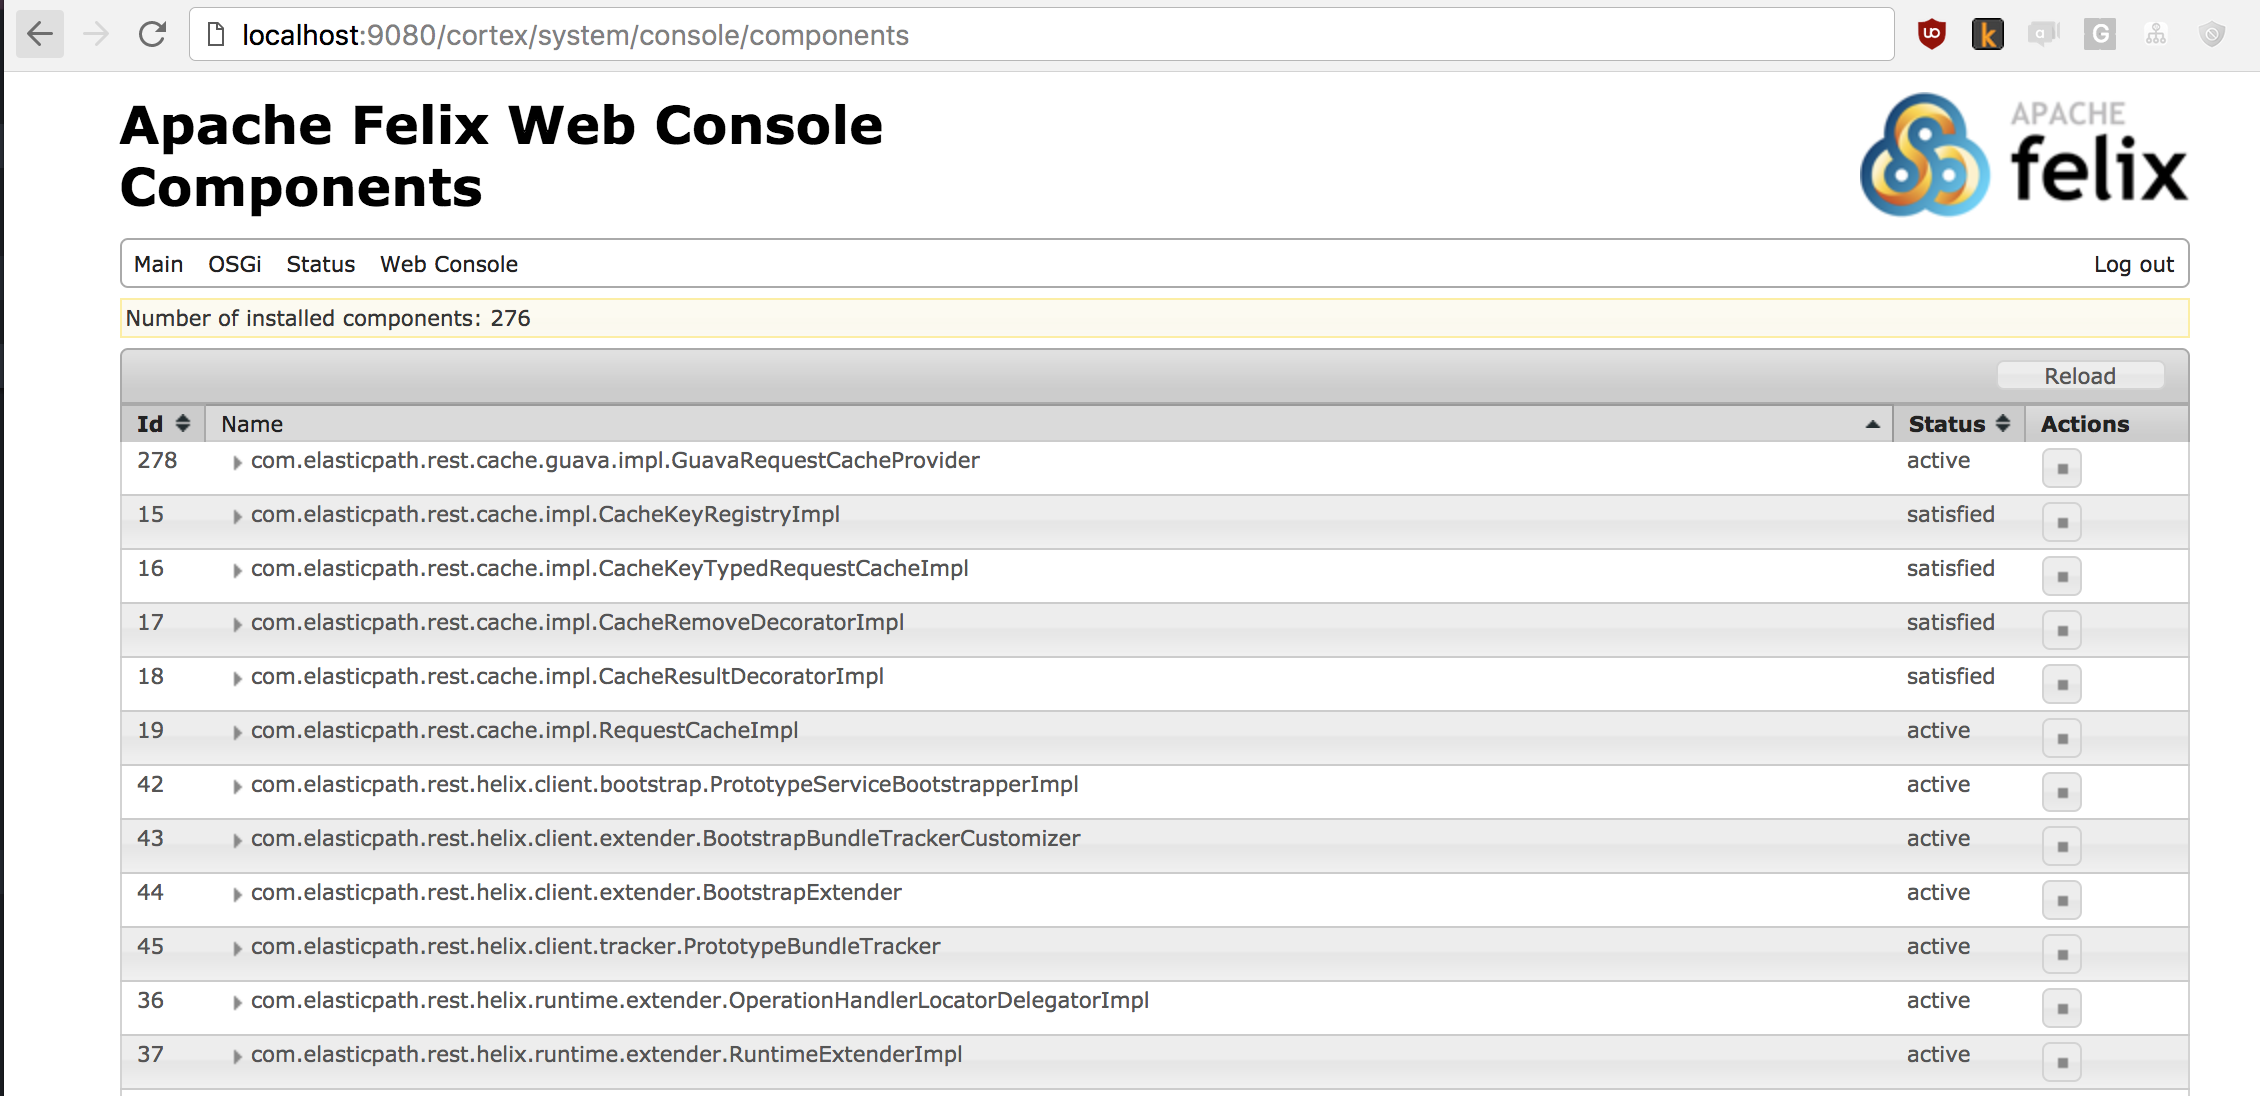 Components in Apache Felix Web Console